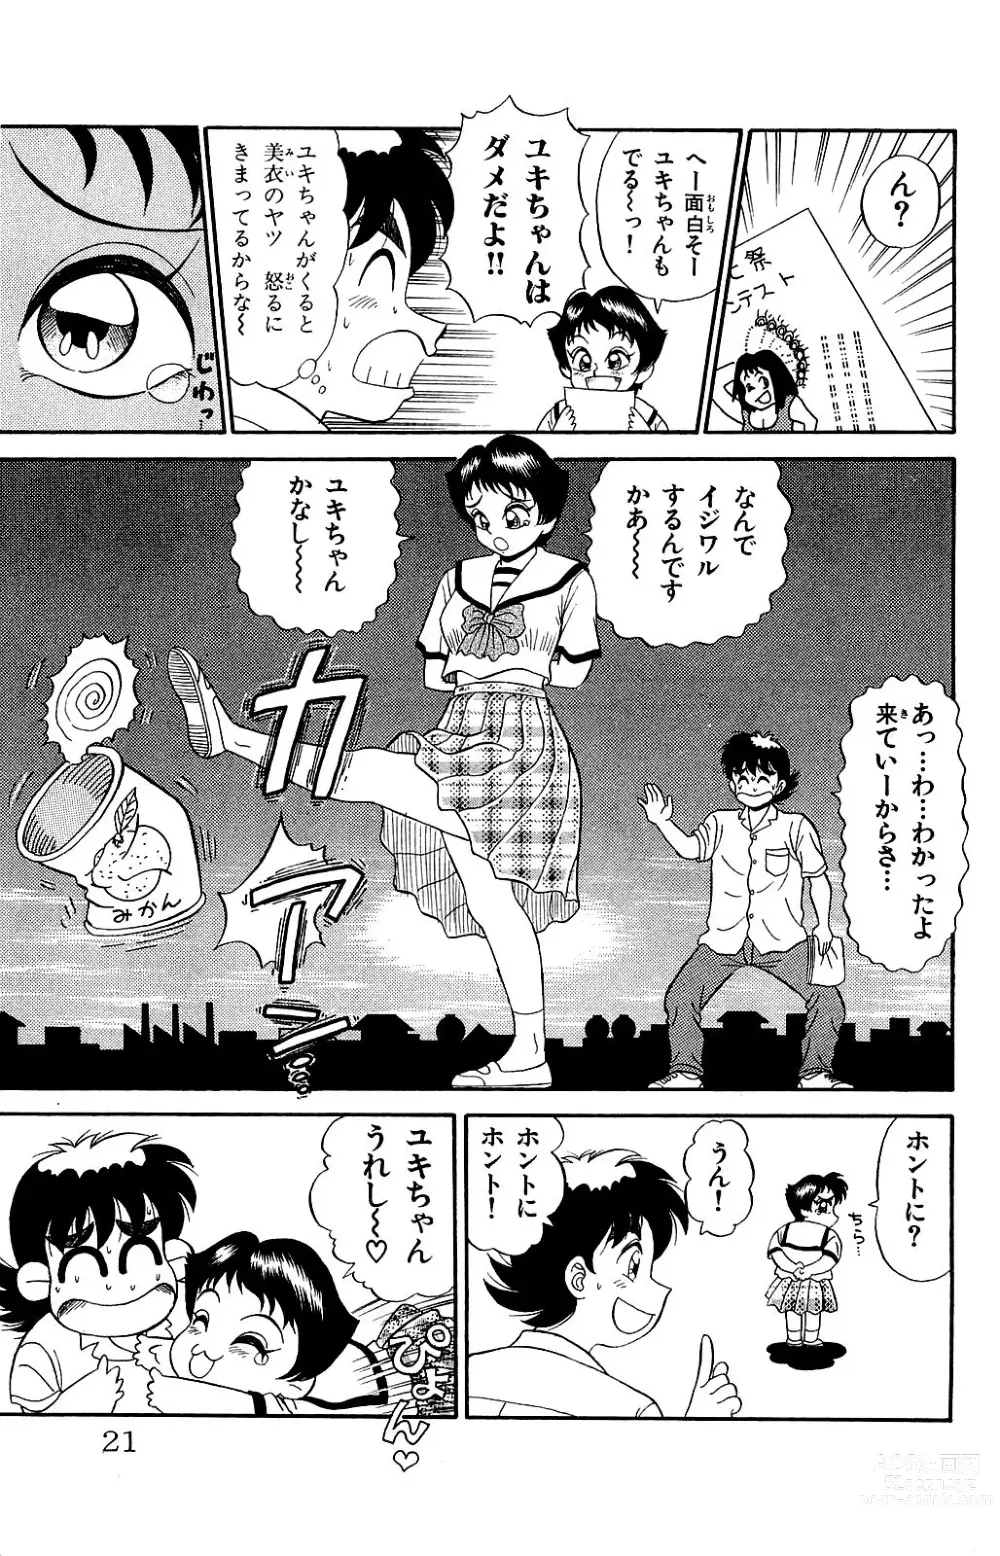 Page 19 of manga Orette Piyoritan Vol. 2